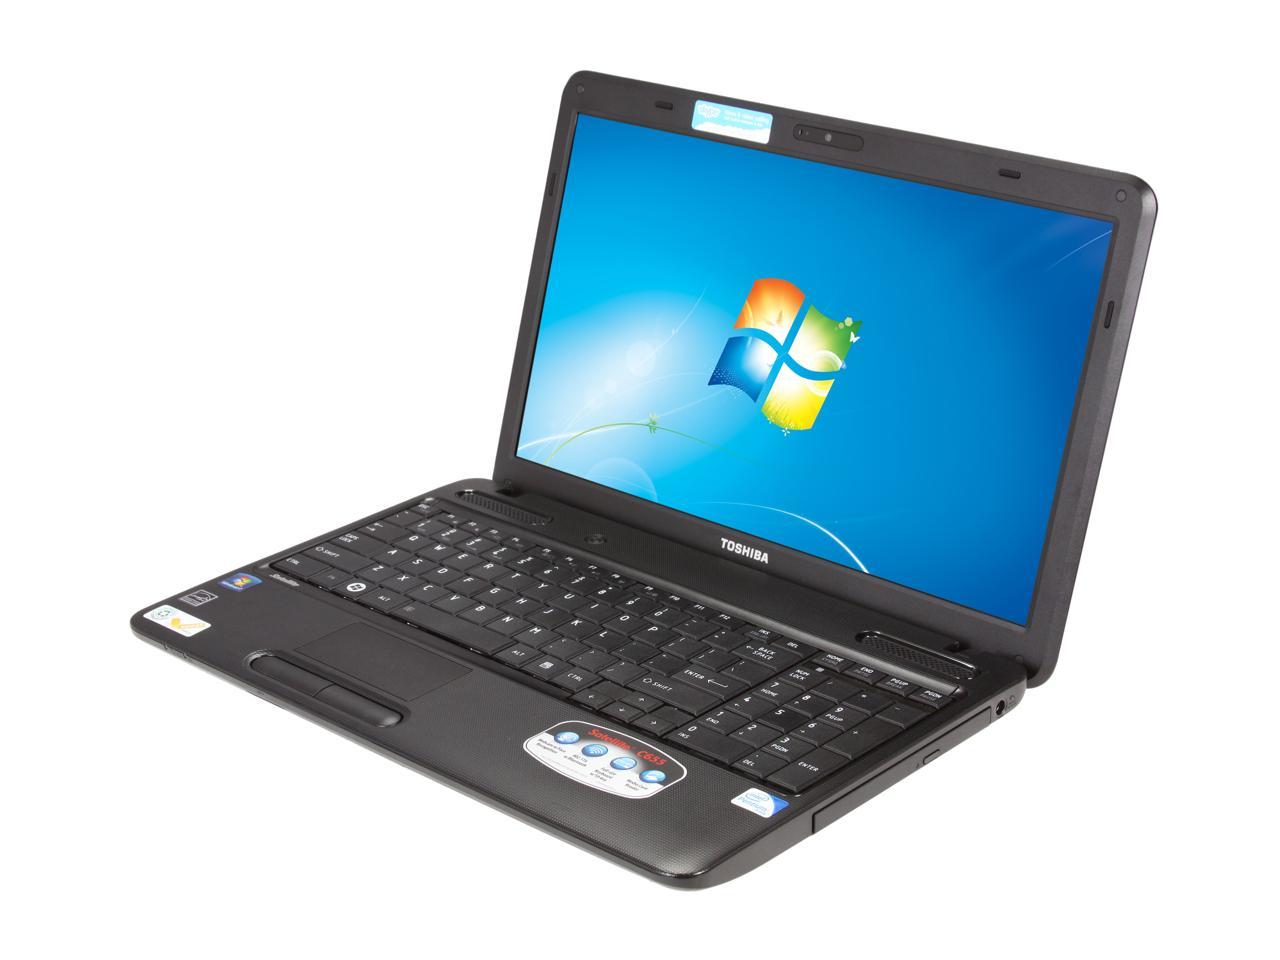 Ноутбук Toshiba Satellite c655-s5049. Intel(r) Pentium(r) CPU 2117u @ 1.80GHZ 1.80 GHZ. Intel pentium b950